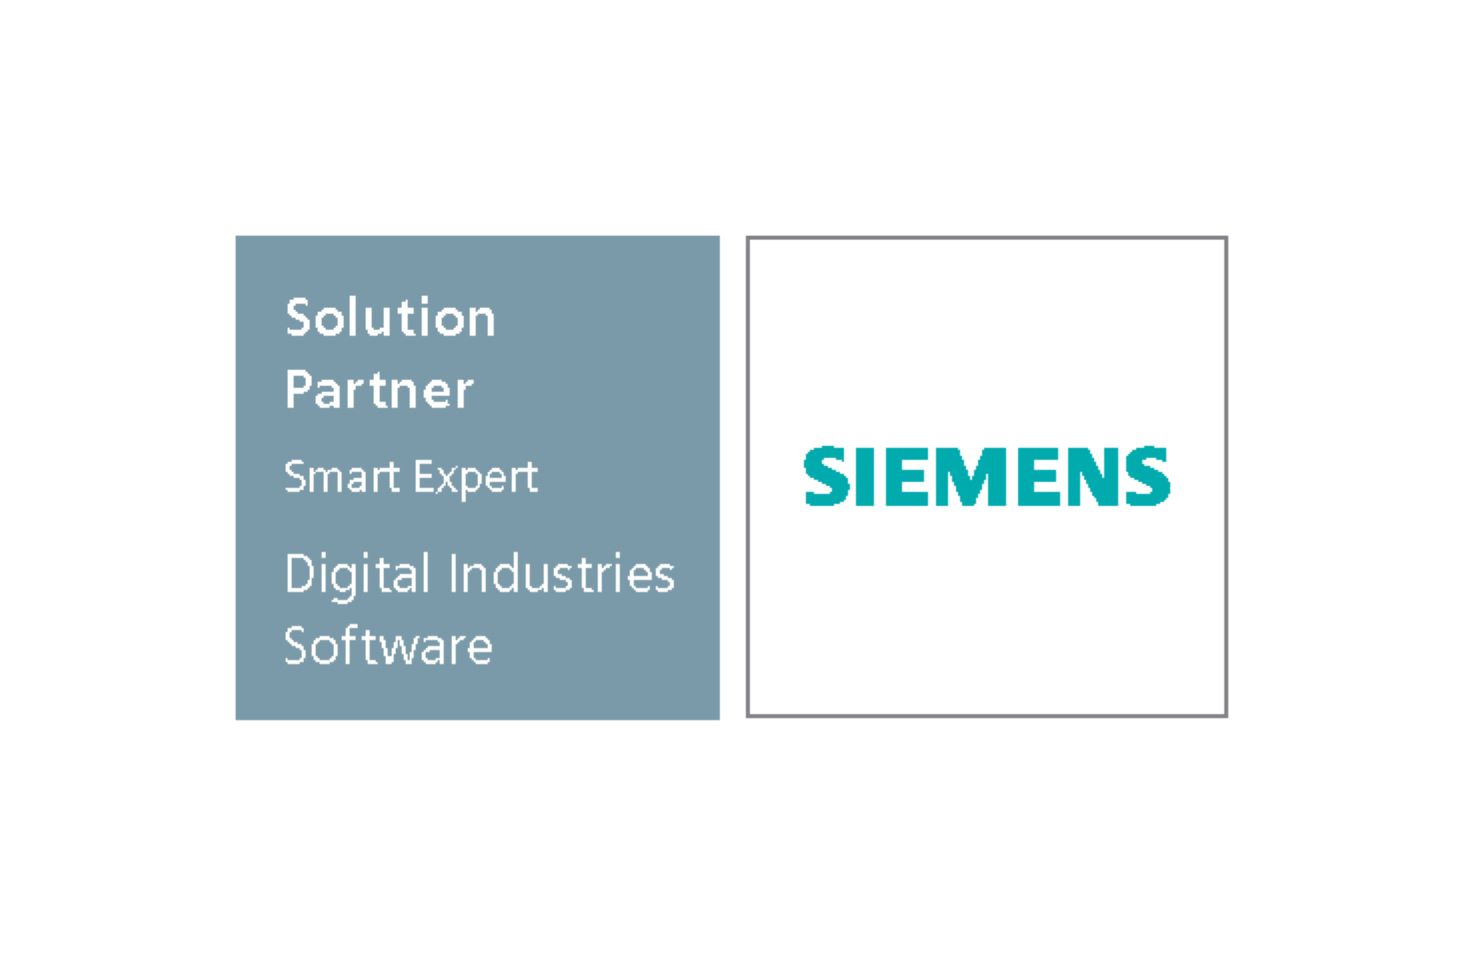 Siemens-SW-Solution-Partner-Smart-Expert-Emblem-Horizontal.jpg - 47.27 kB